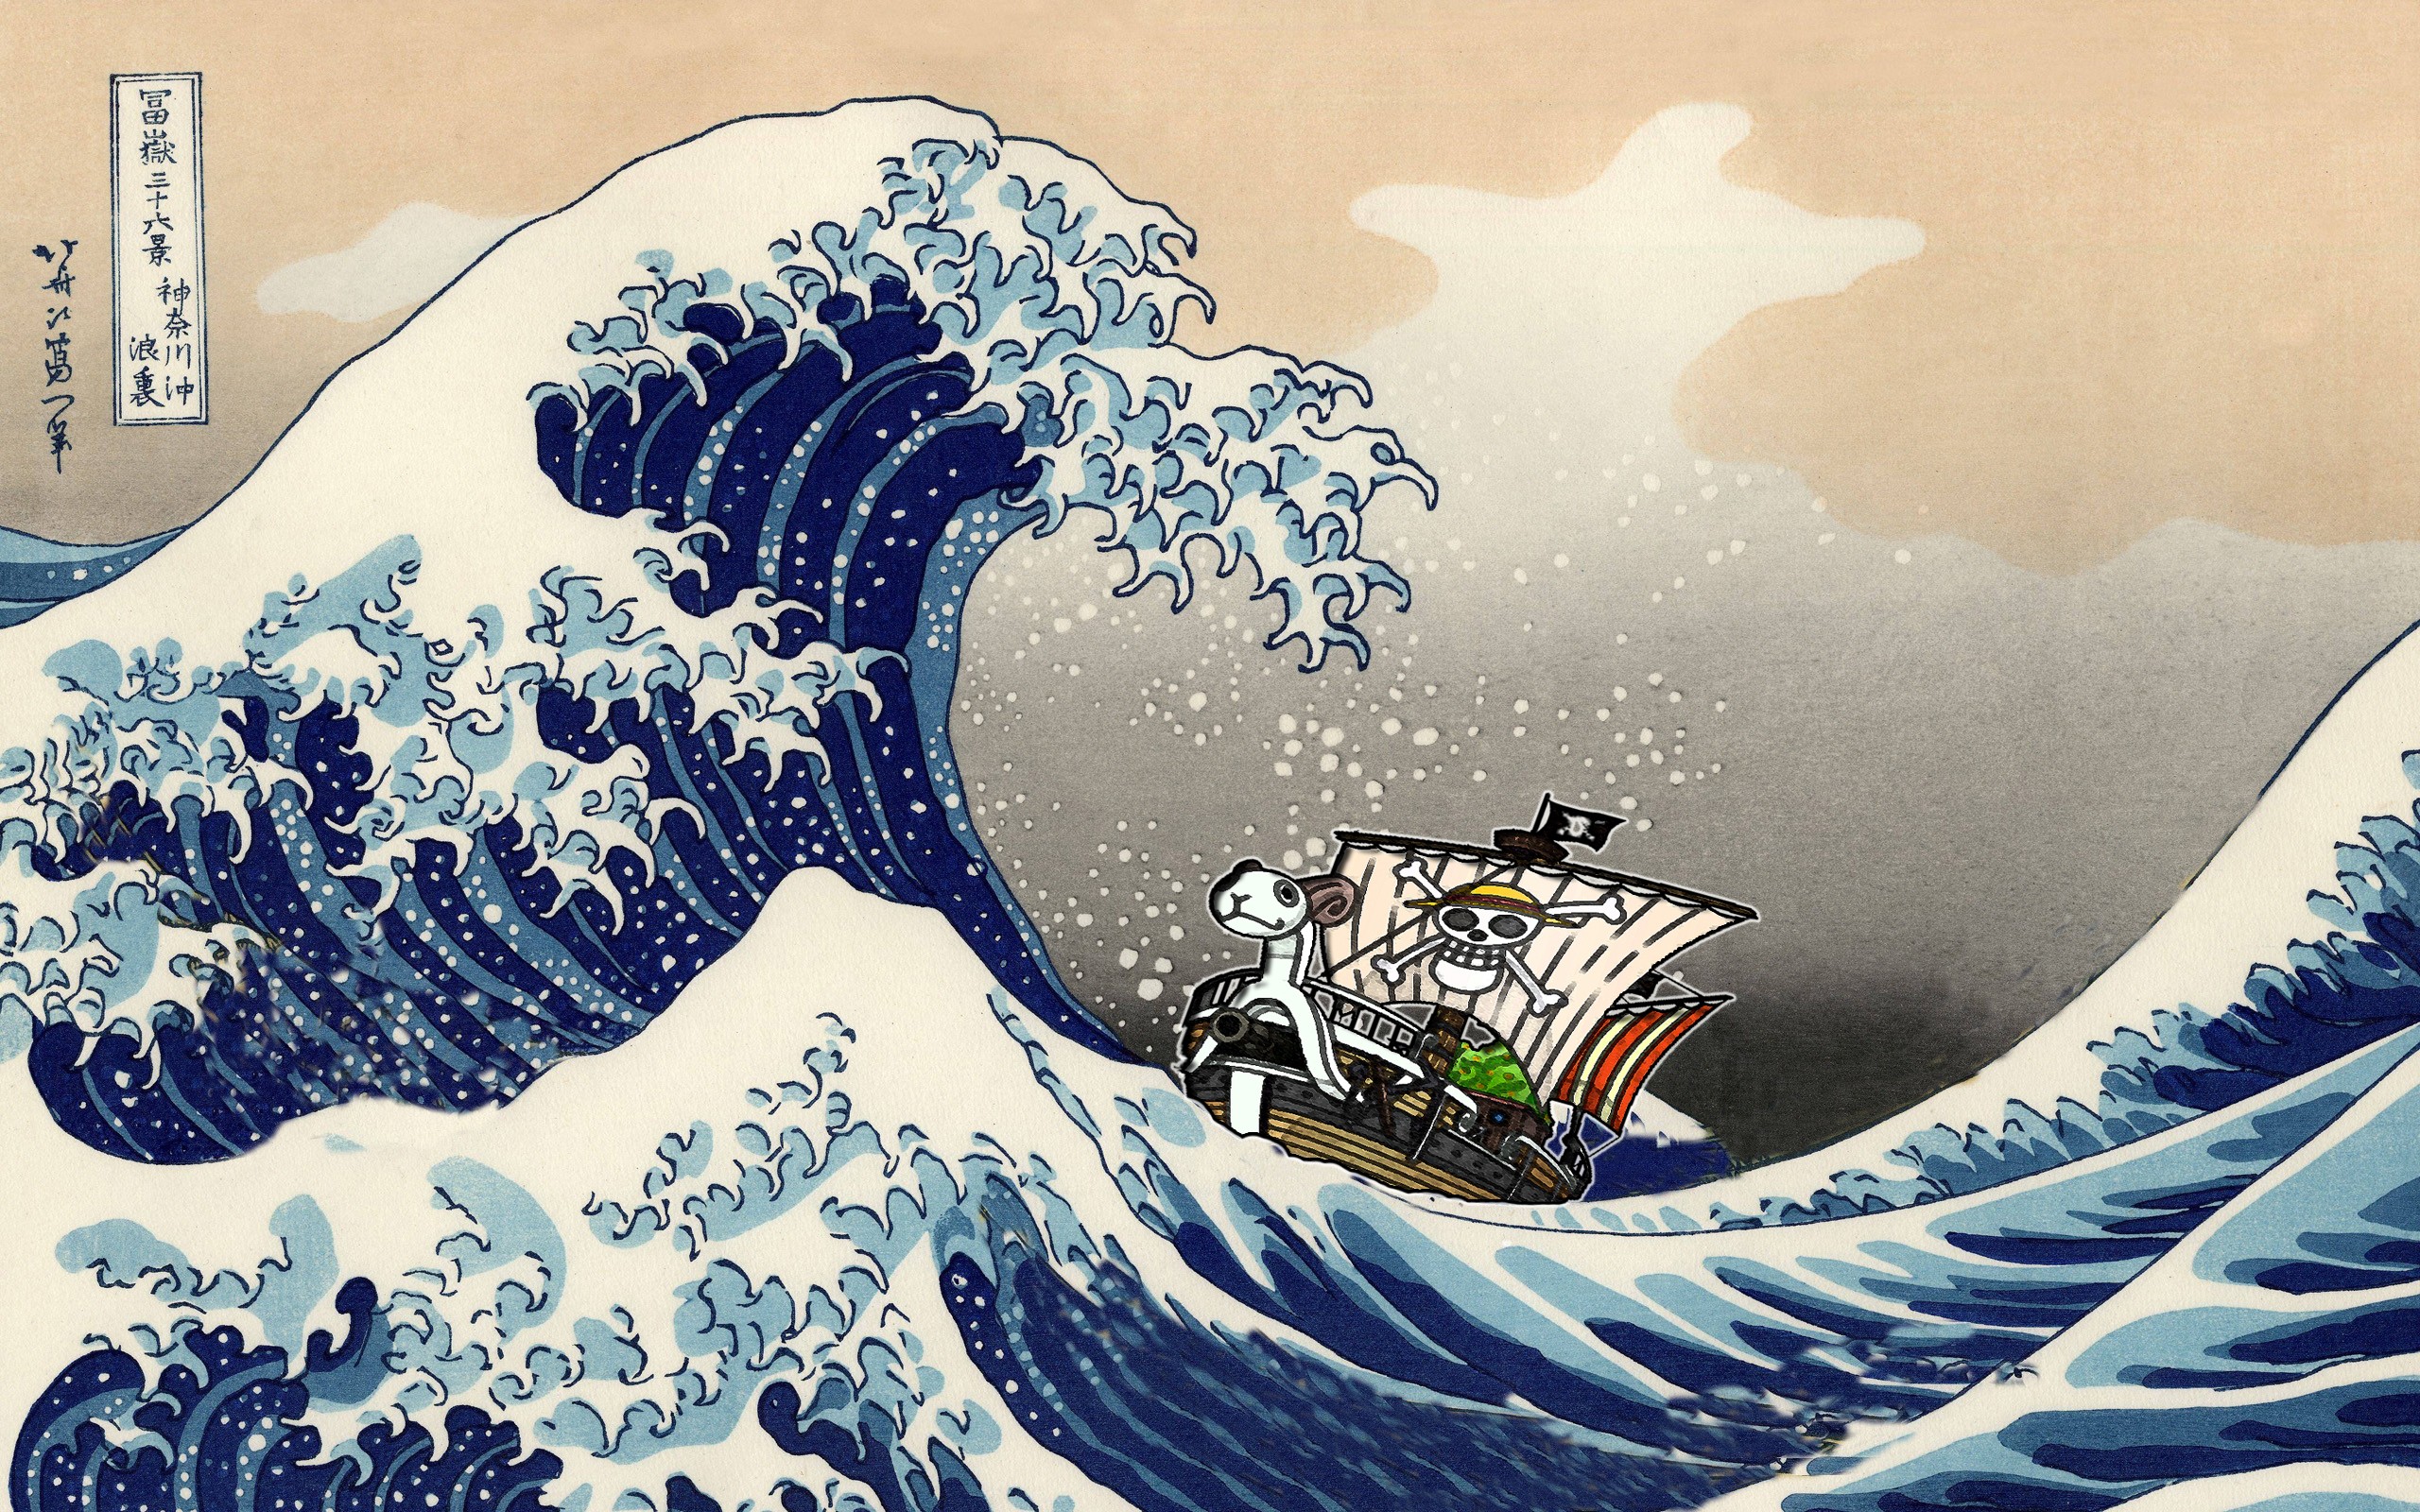 General 2560x1600 The Great Wave of Kanagawa anime Asia waves artwork sea Japan ship One Piece digital art